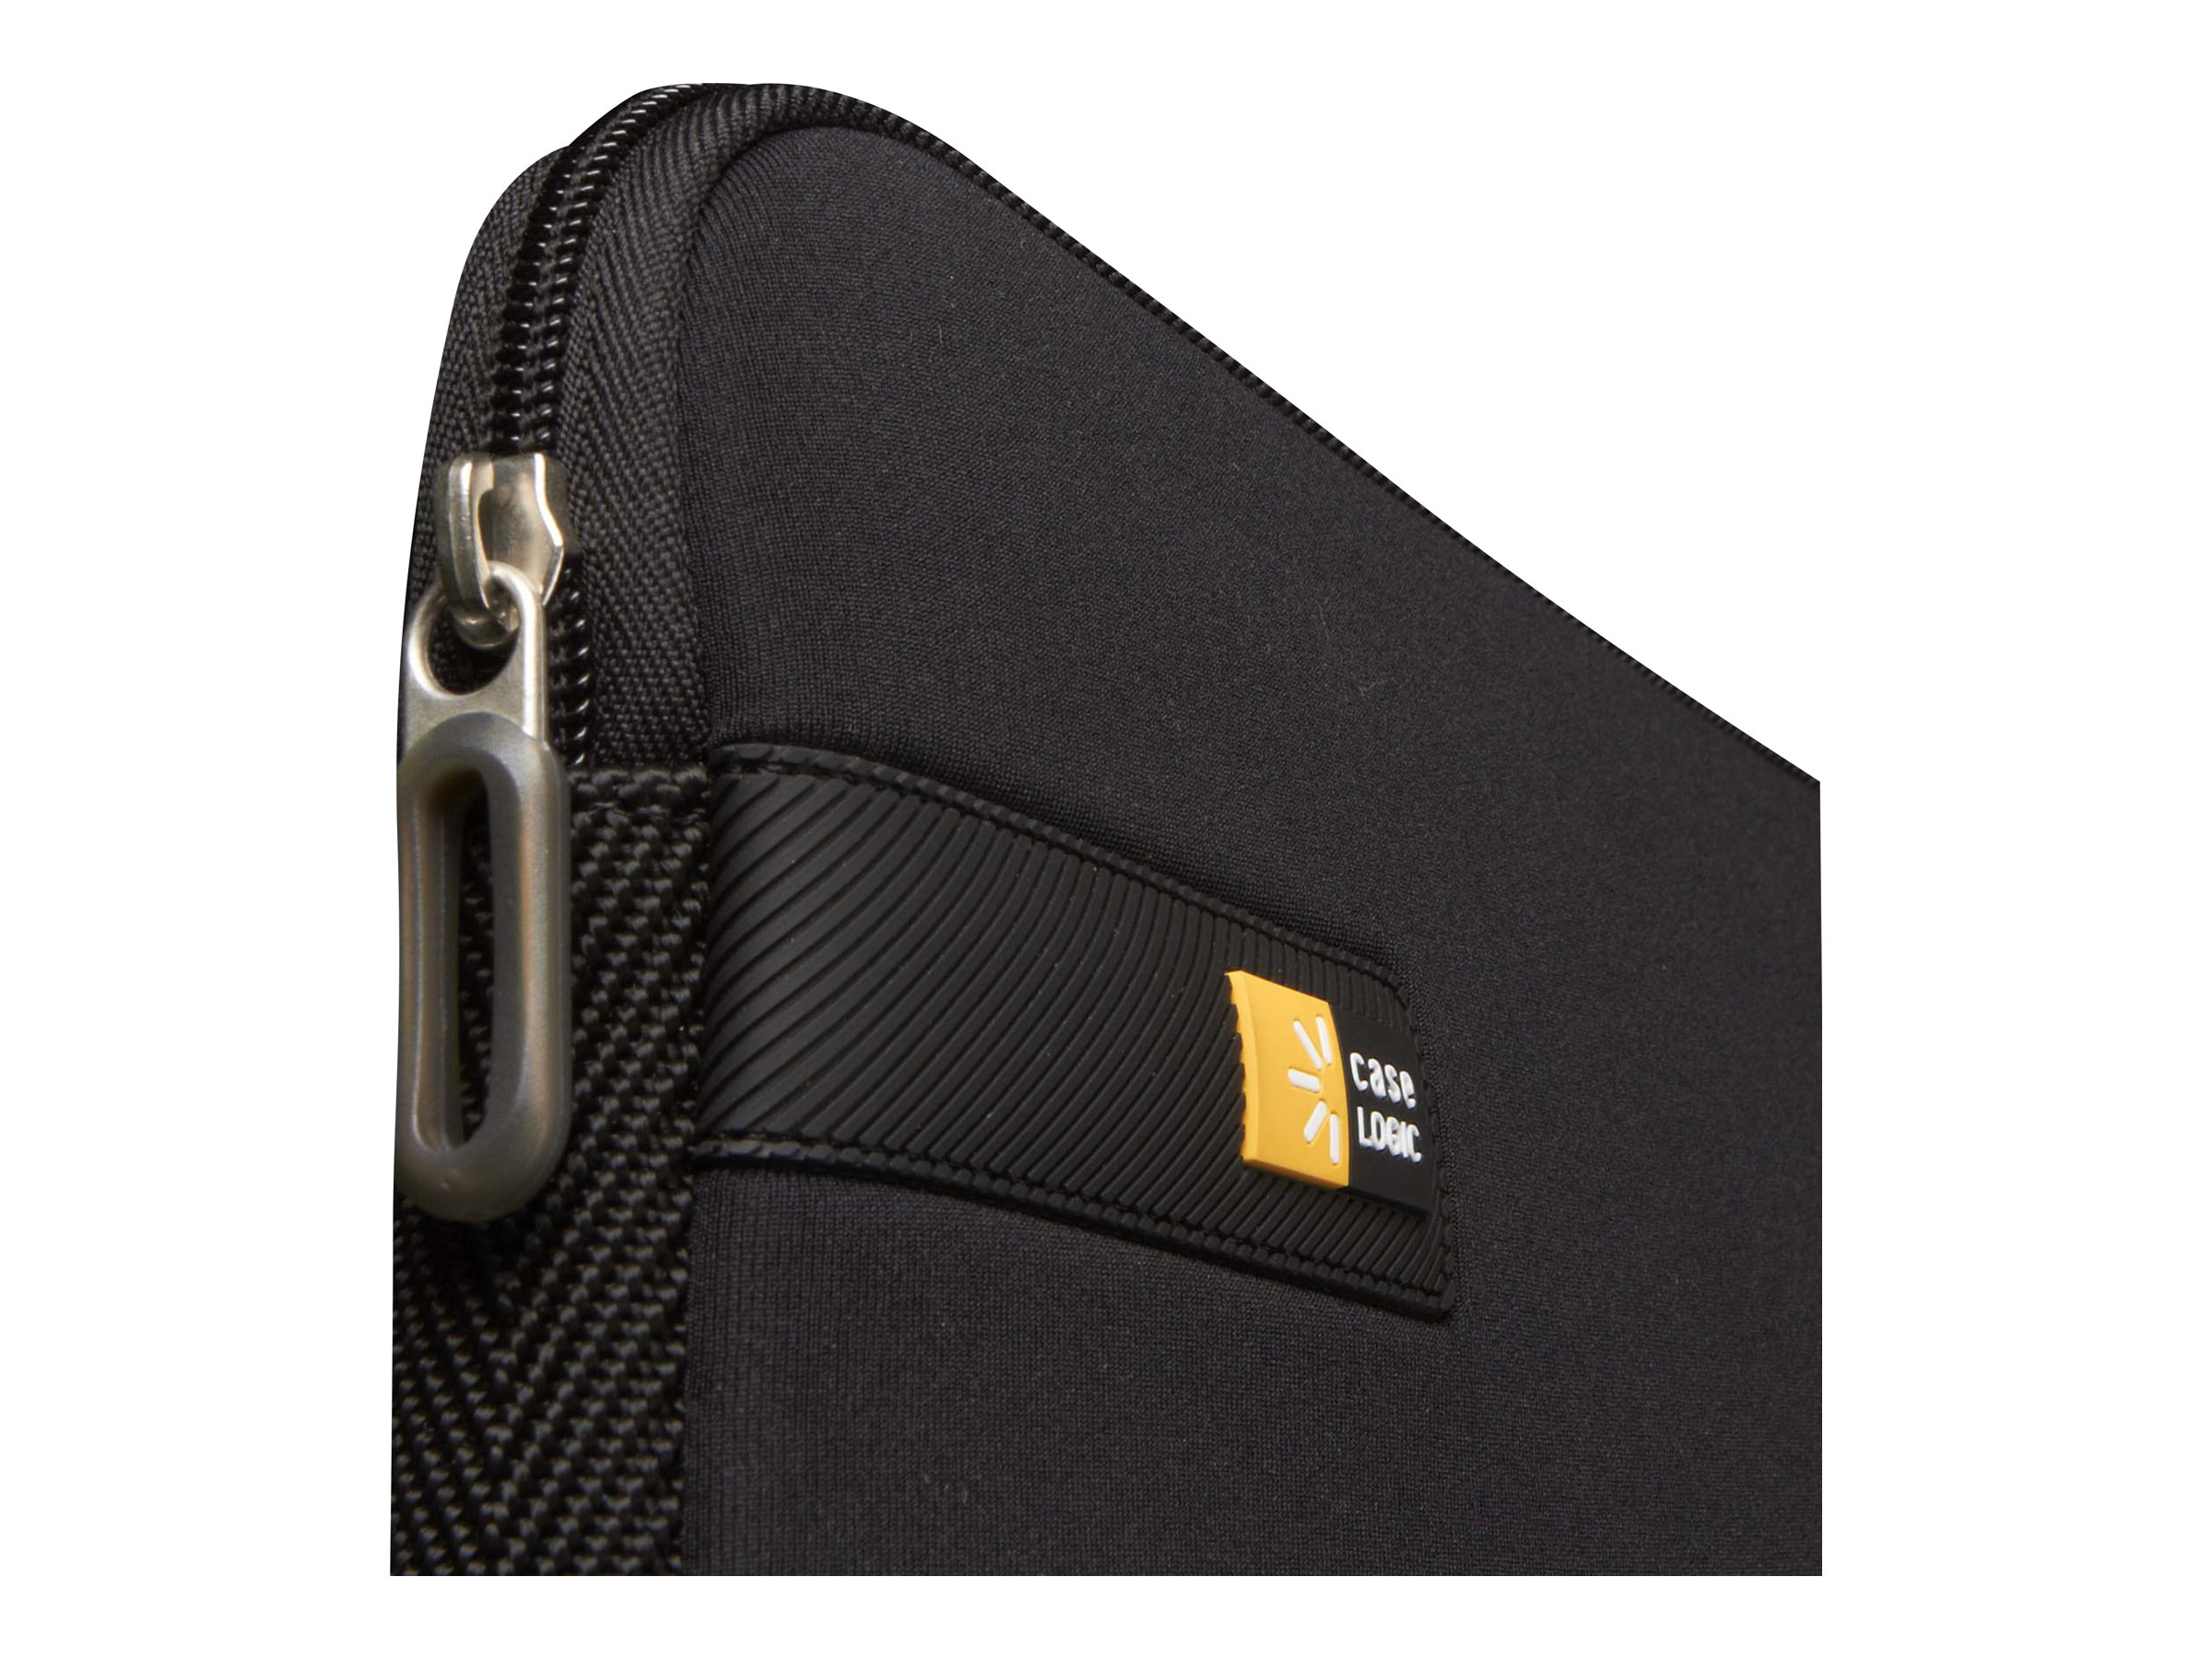 Case Logic Netbook Sleeve - Notebook-Hülle - 29.5 cm (11.6")